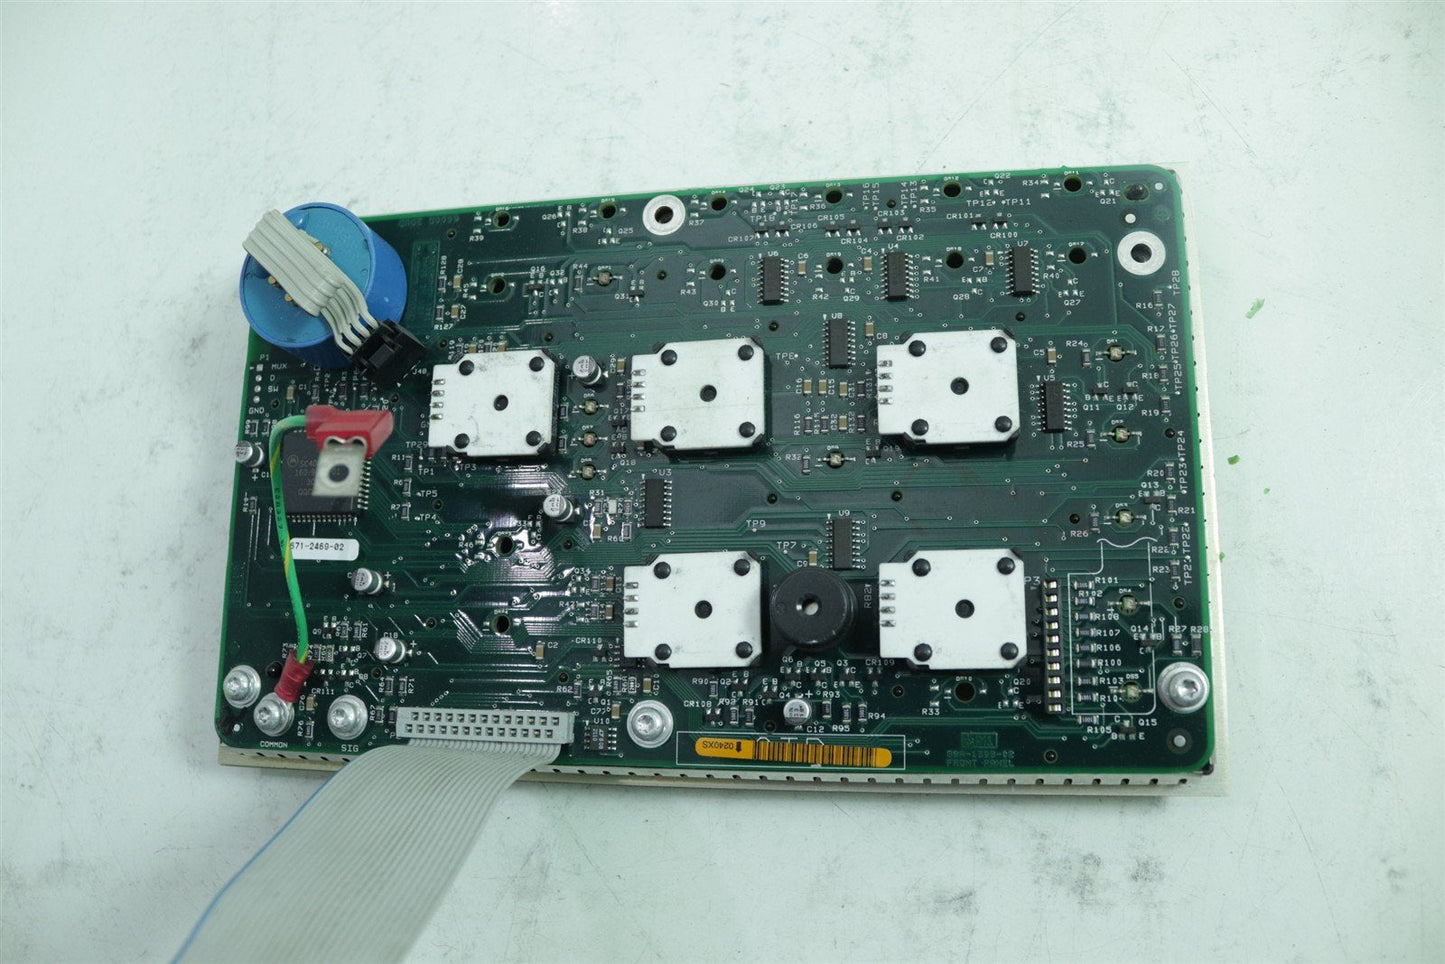 Tektronix OSCILLOSCOPE 520C knob and button Panel 671-2469-02 Tested